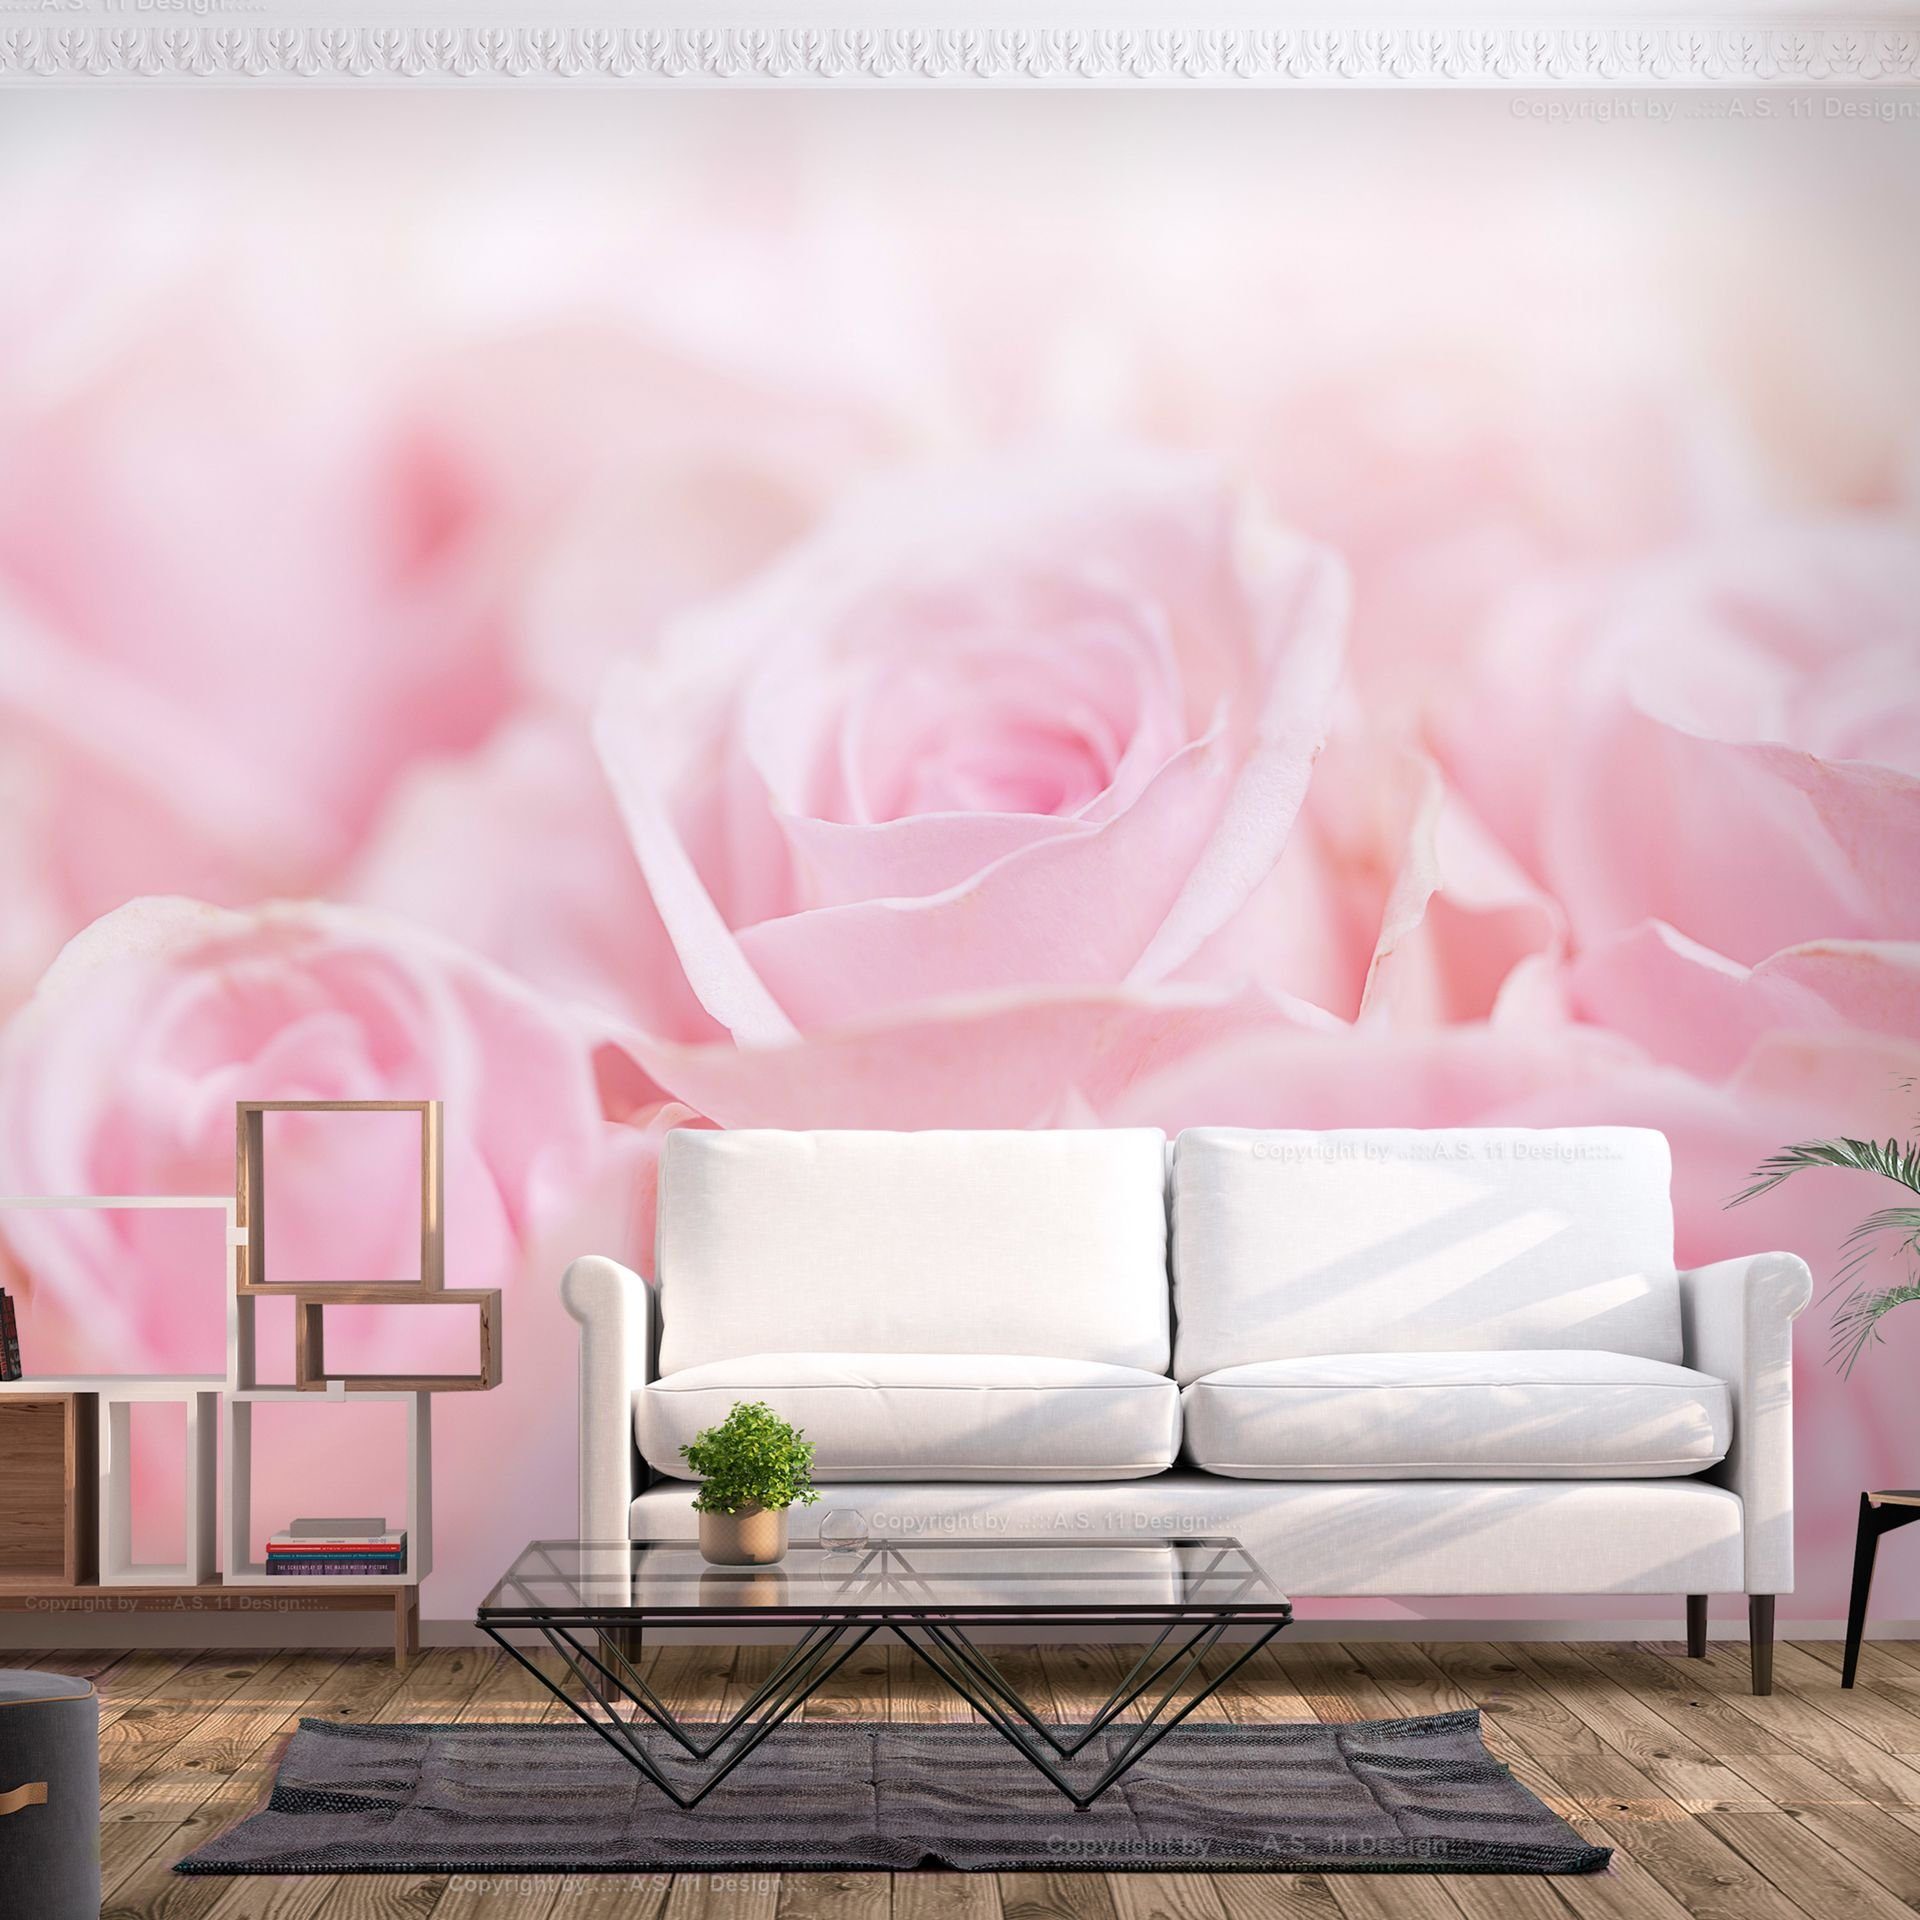 KUNSTLOFT Vliestapete Ocean of Roses 1x0.7 m, halb-matt, lichtbeständige Design Tapete